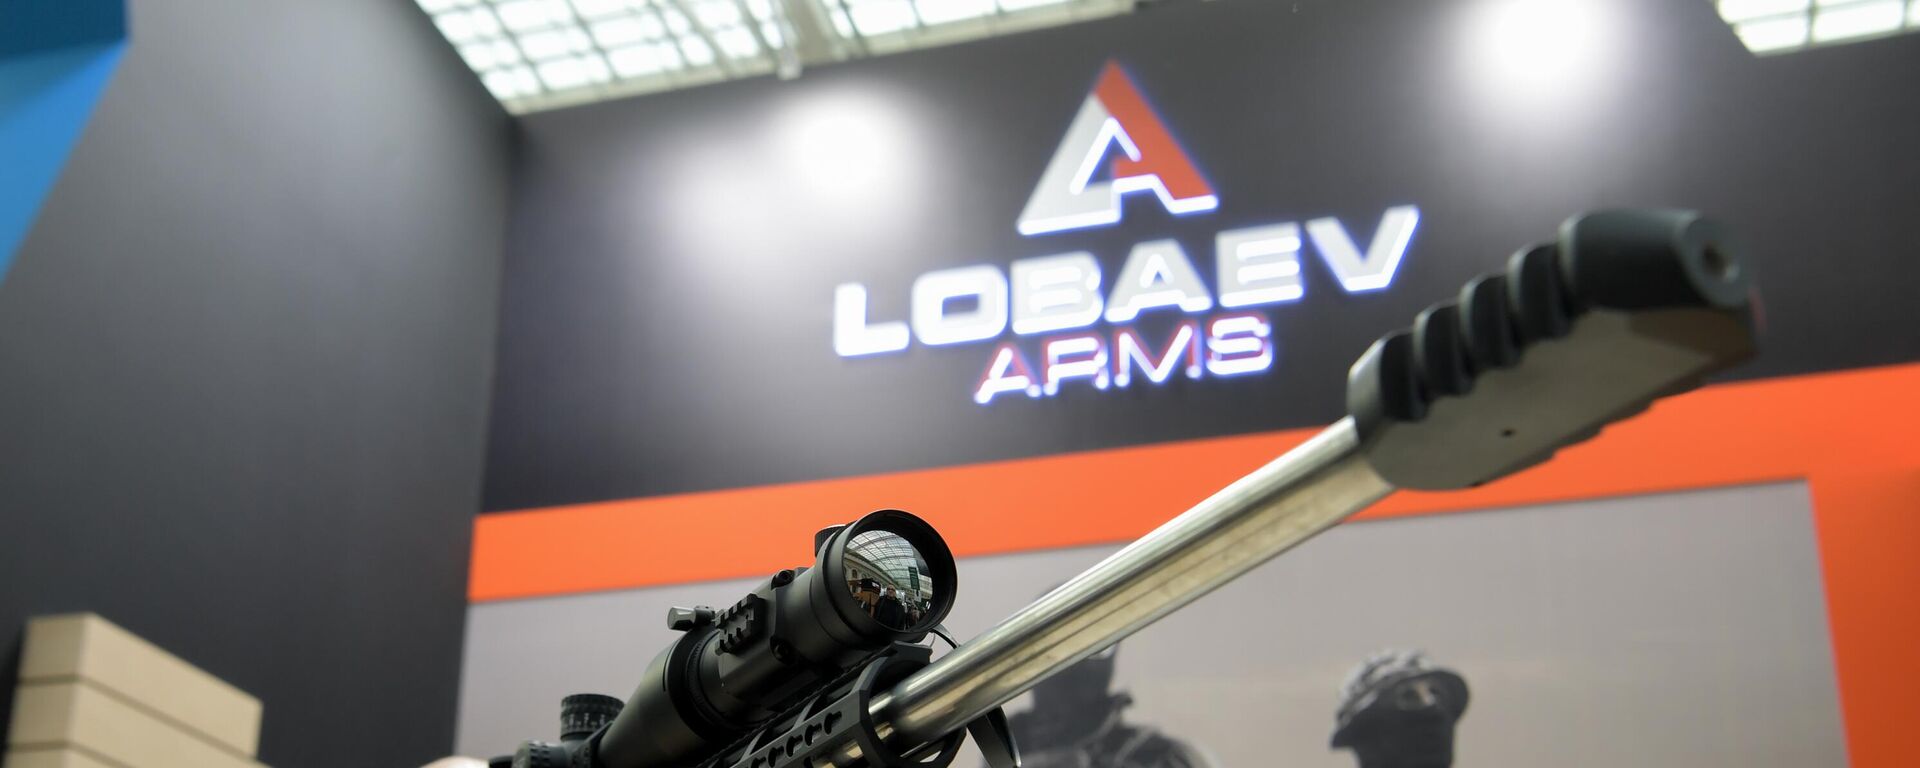 Lobaev Arms' DXL-4M Sevastopol sniper rifle showcaseed at the ORЁLEXPO exhibition in Moscow. File photo - Sputnik International, 1920, 15.10.2023